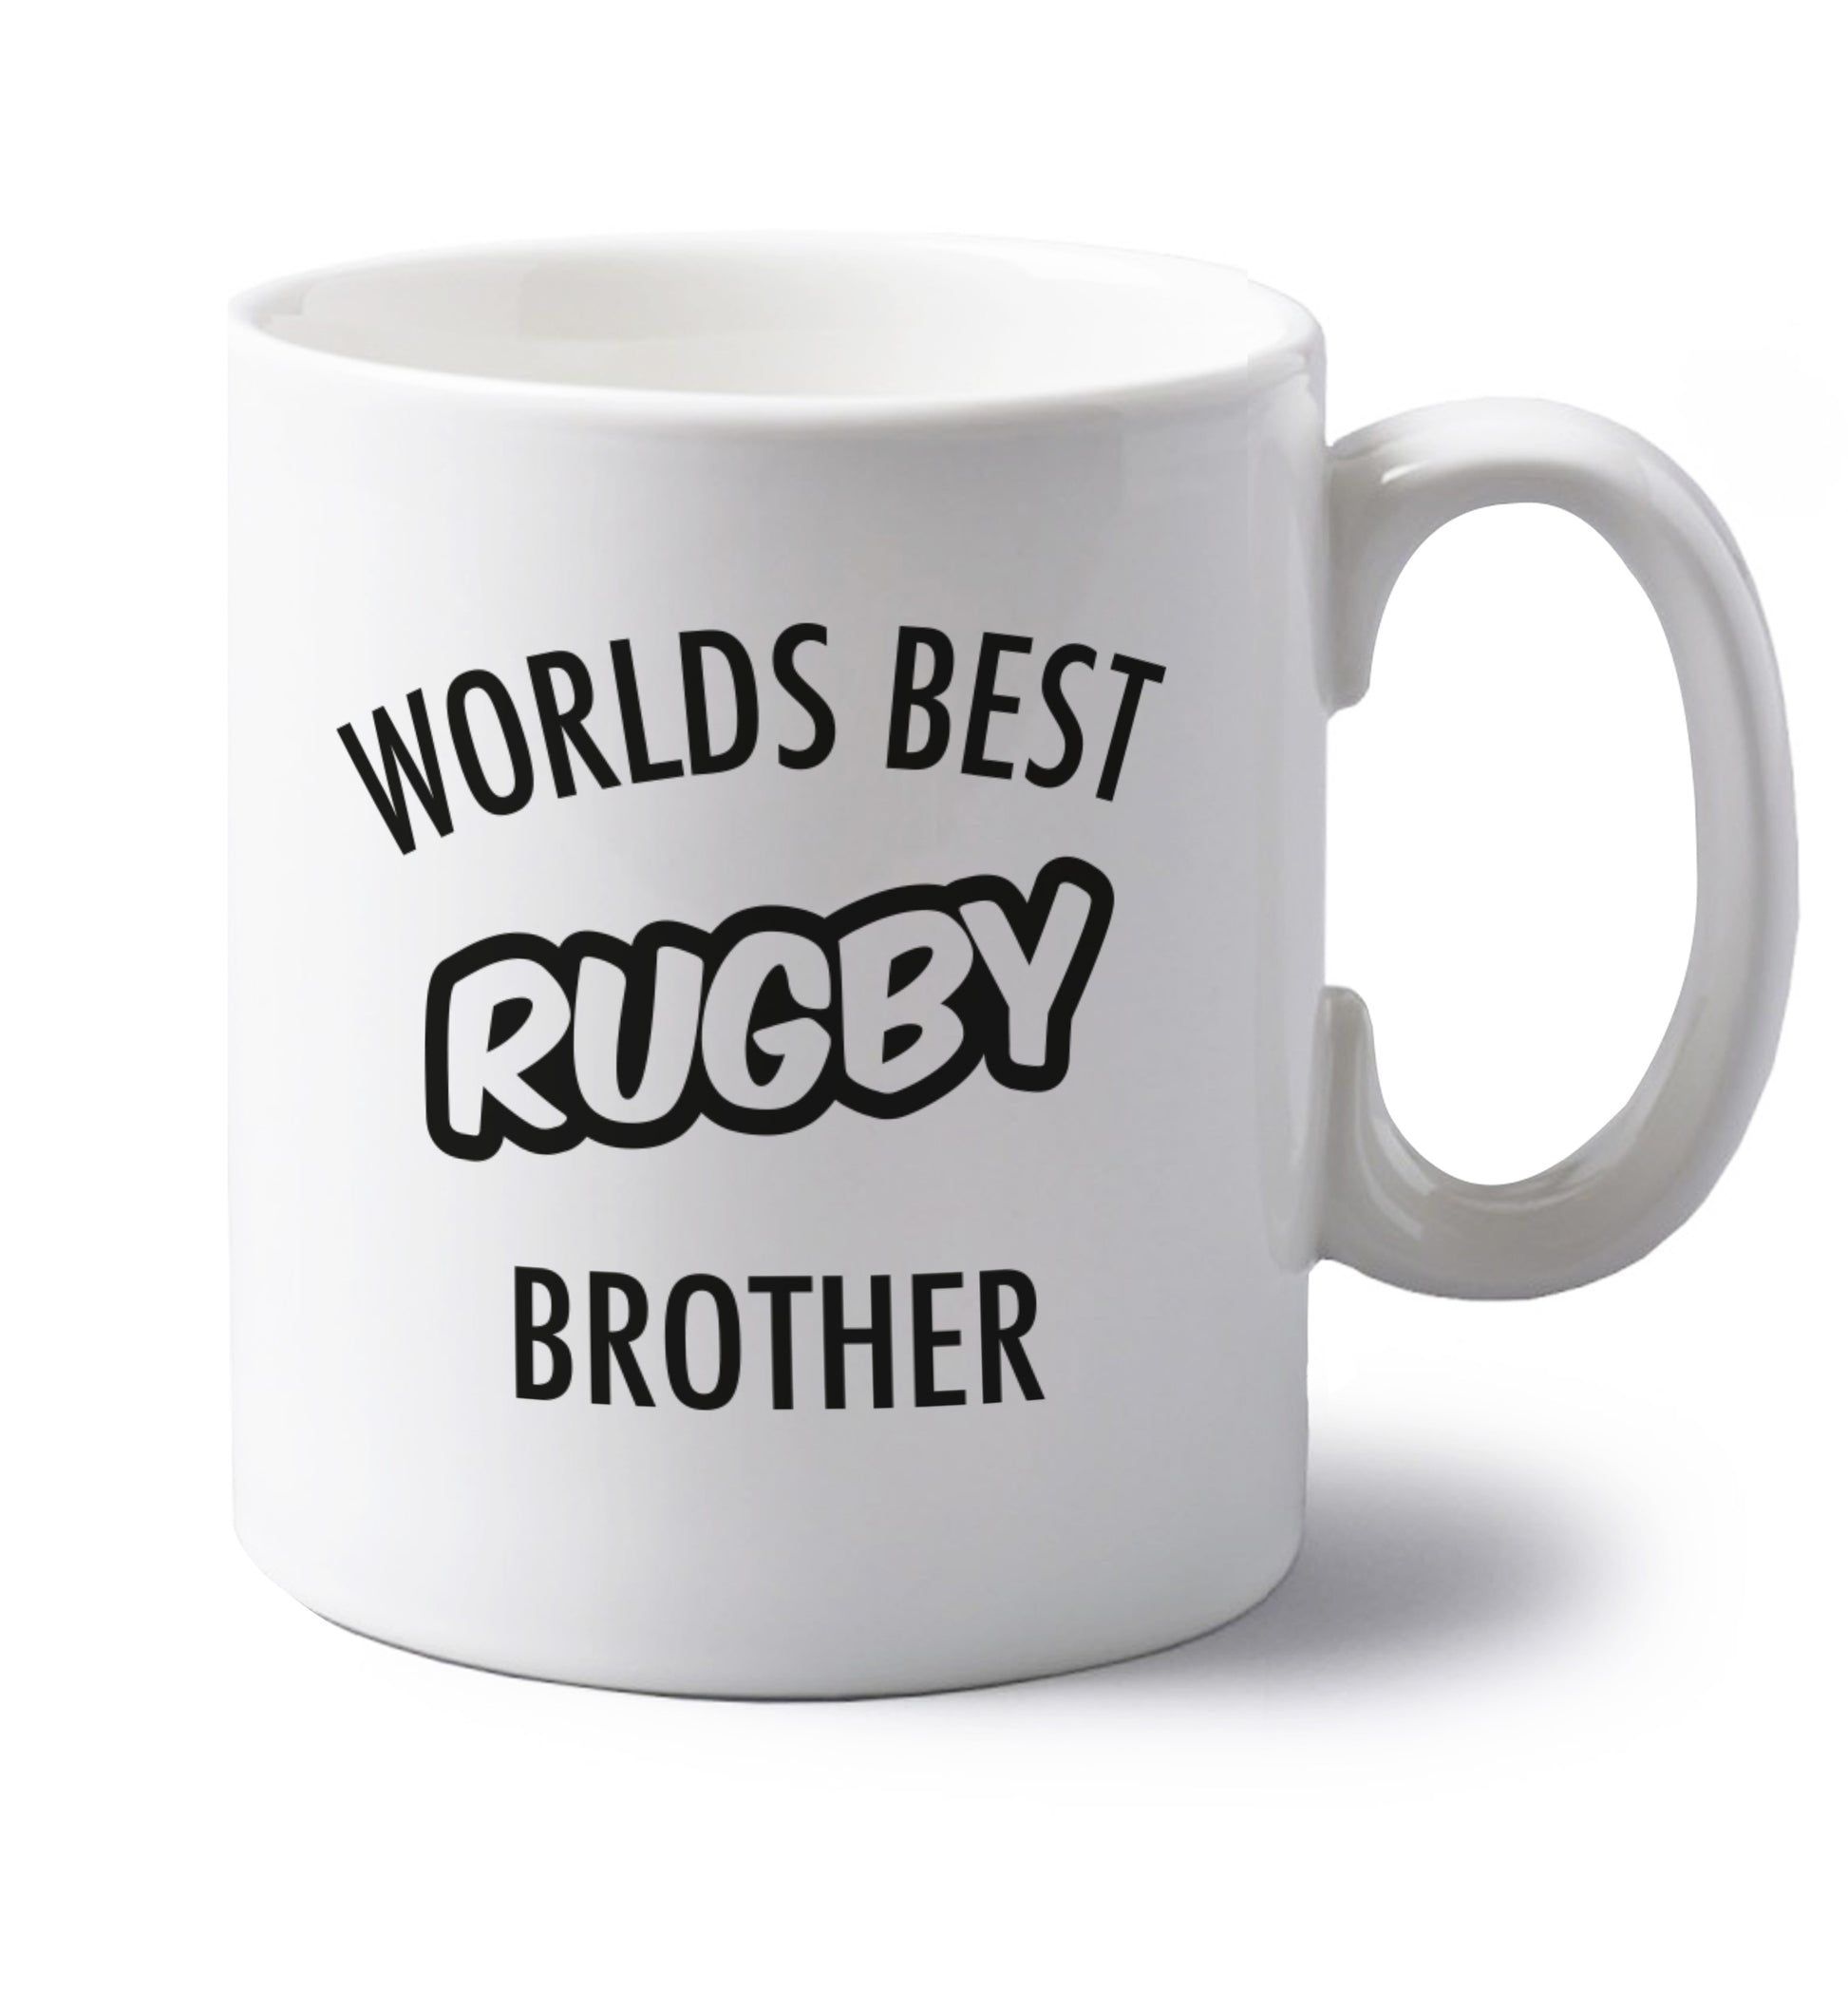 Worlds best rugby brother left handed white ceramic mug 